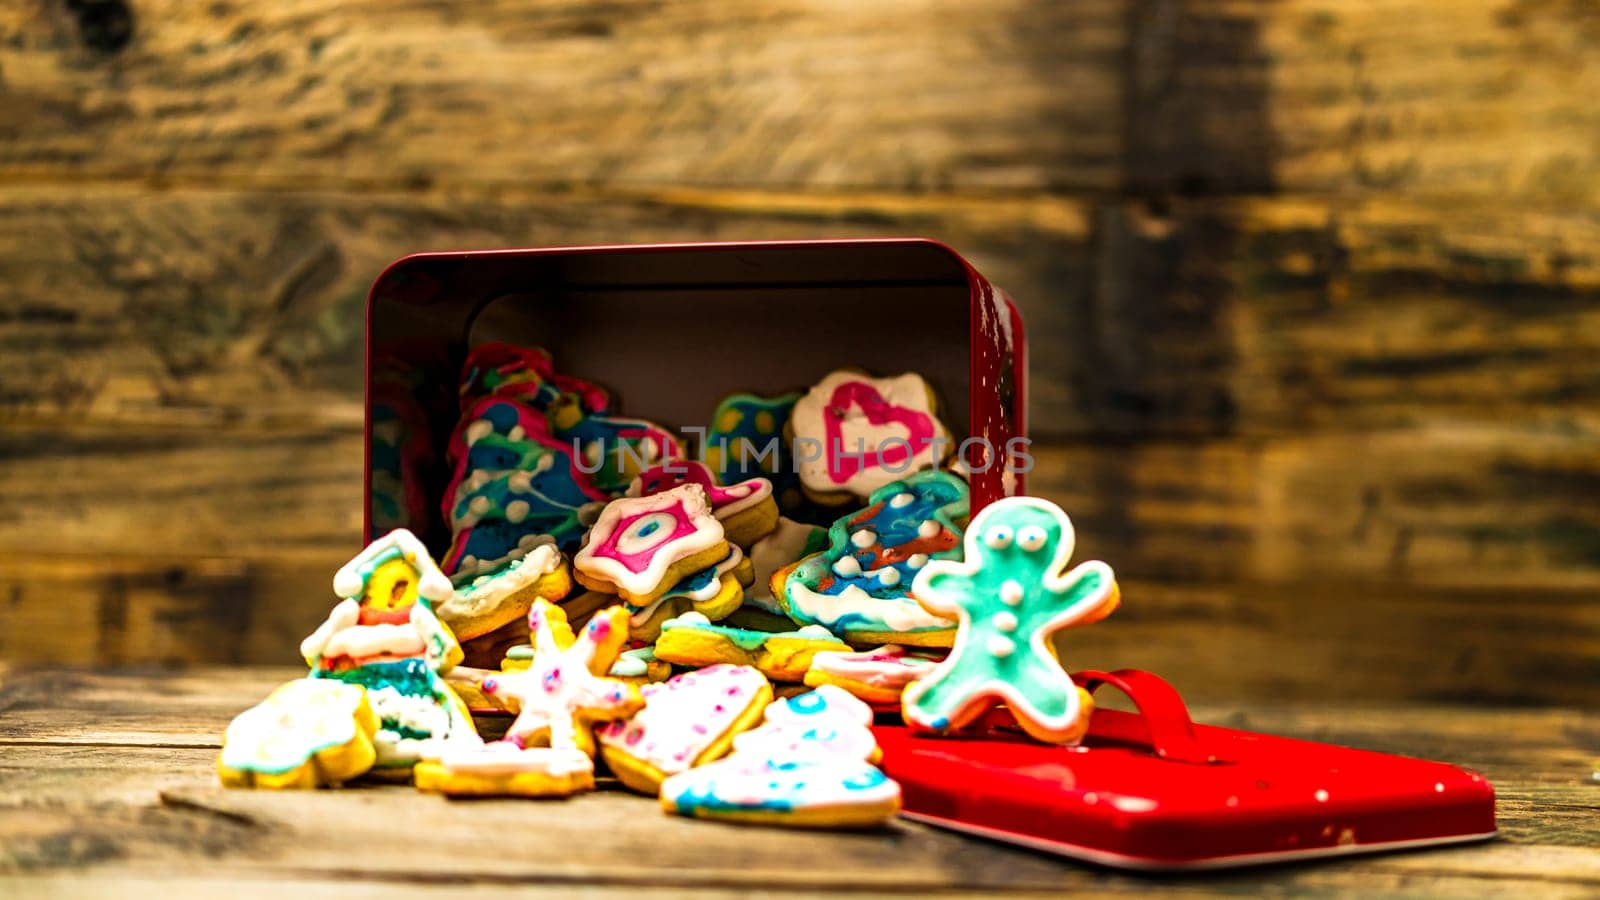 Tasty homemade Christmas cookies on wooden table by vladispas